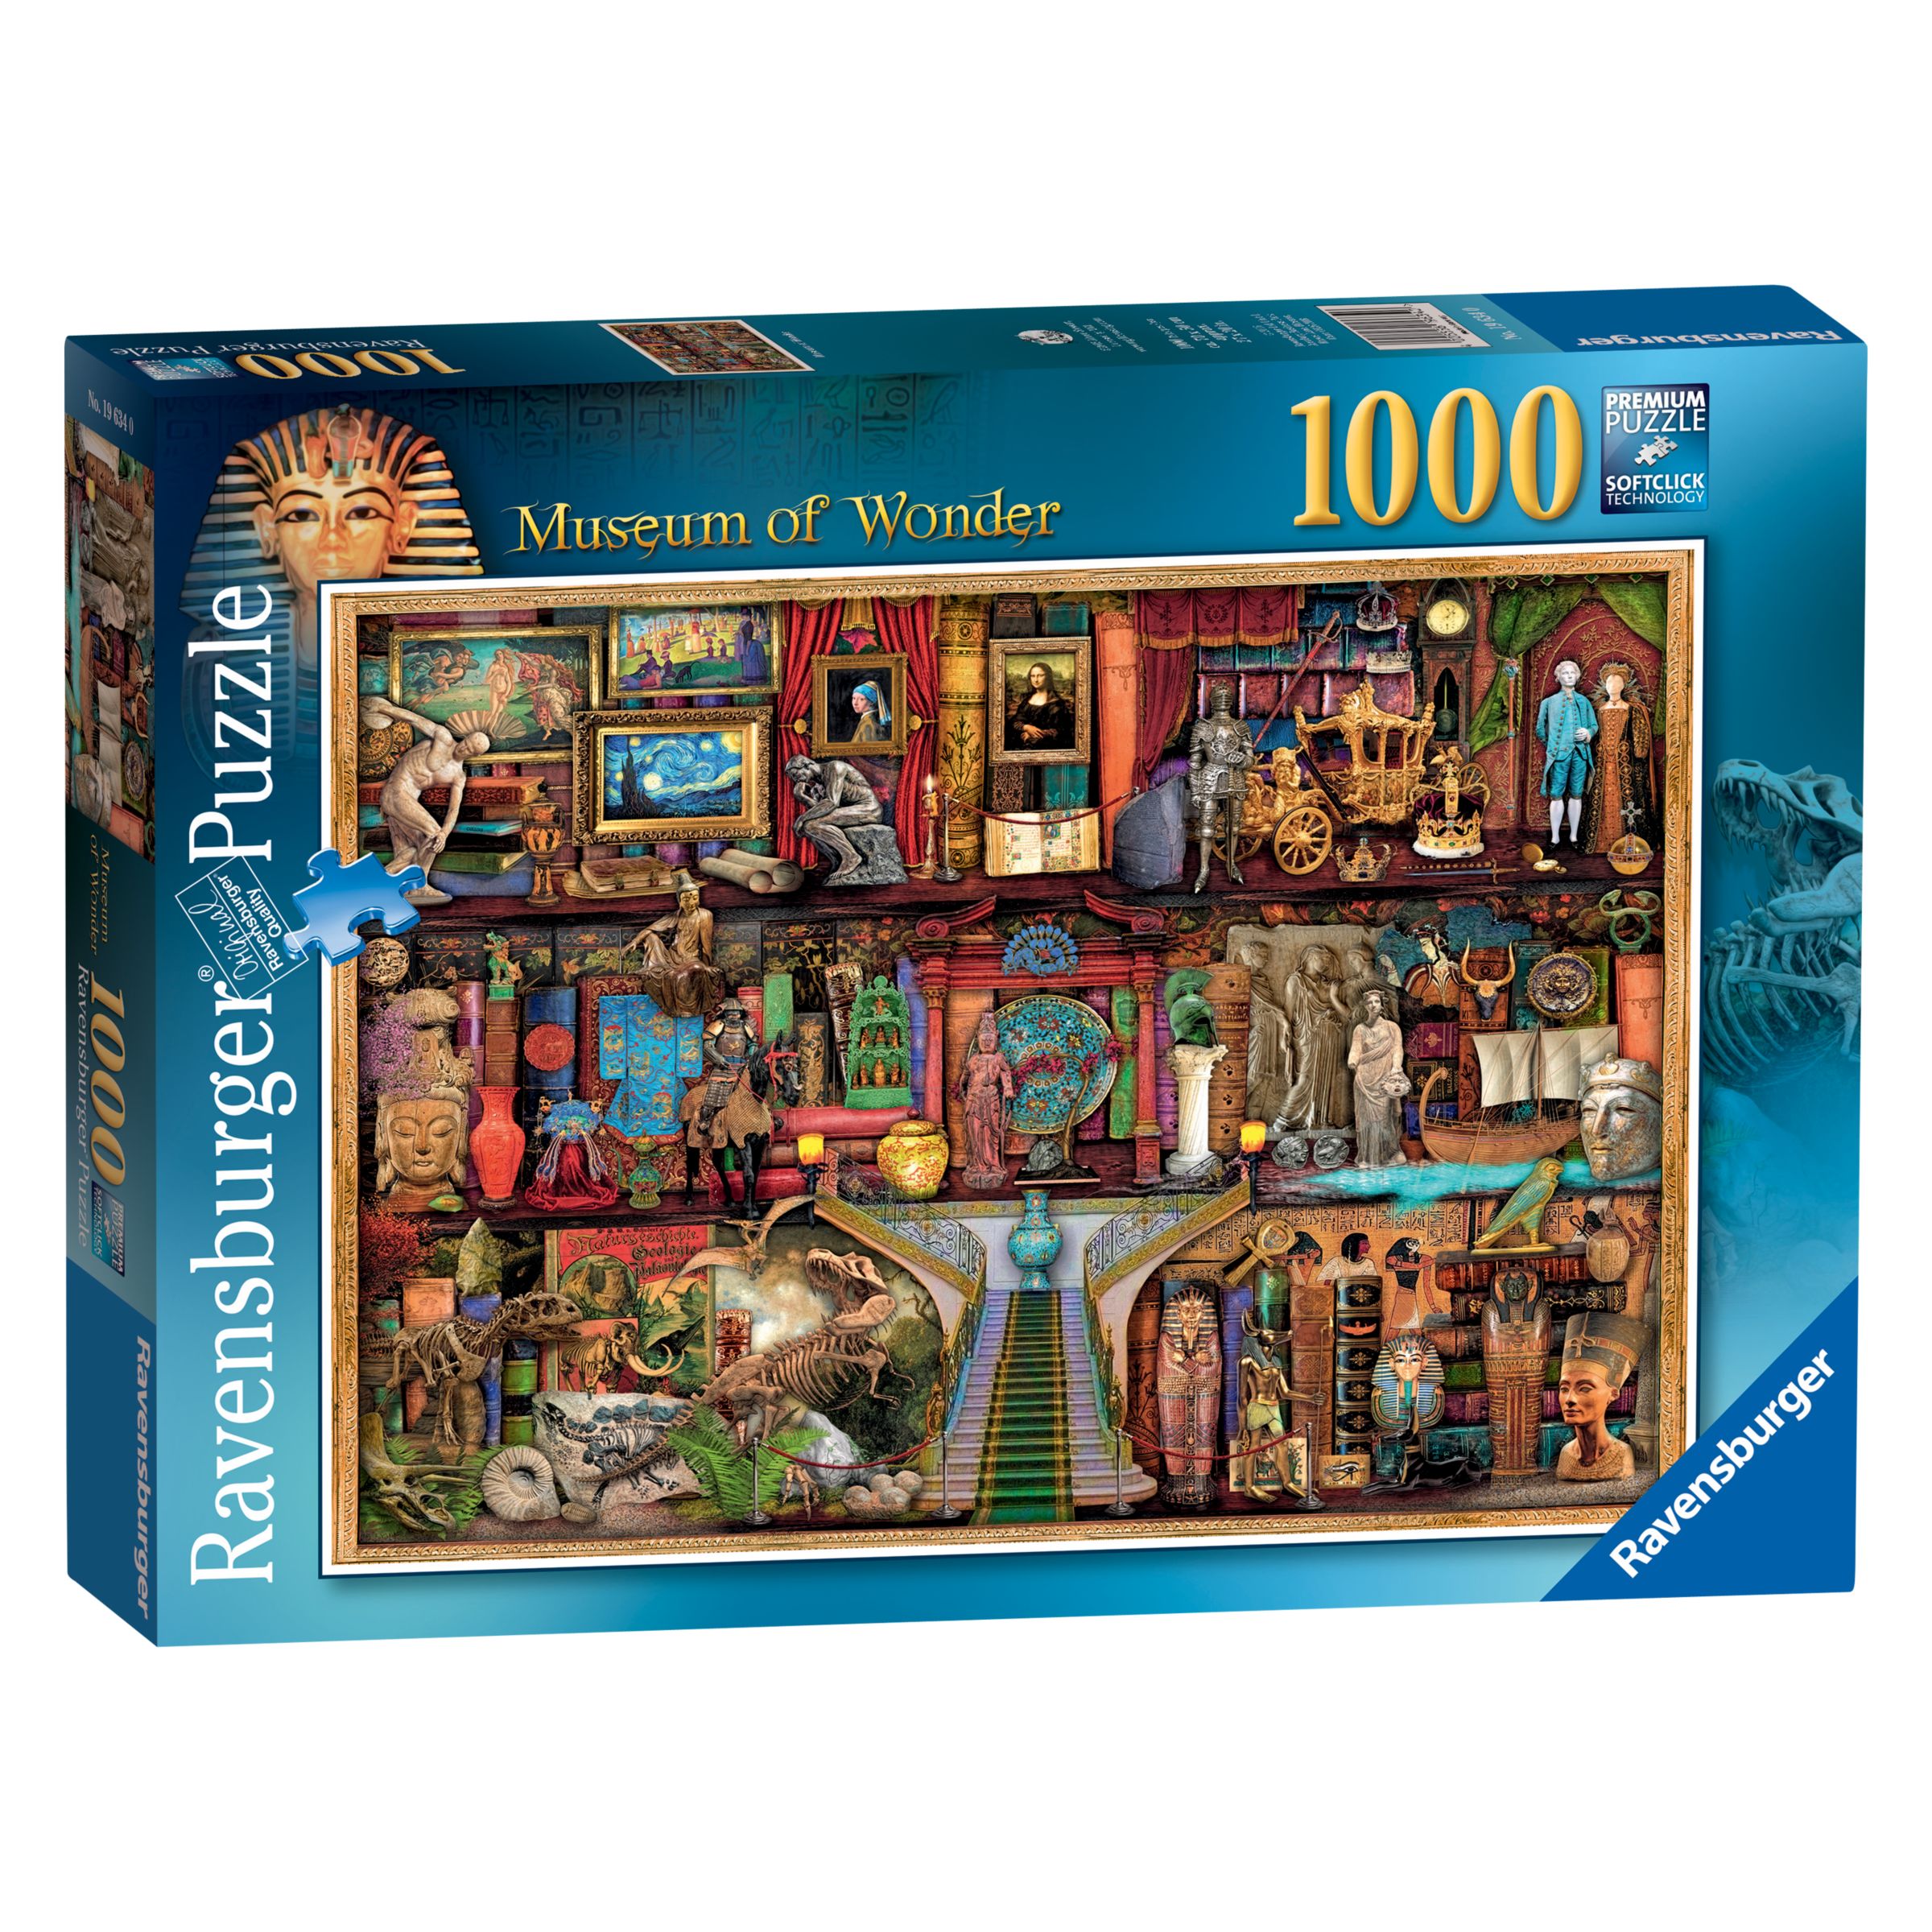 Ravensburger Museum of Wonder Jigsaw Puzzle, 1000 Pieces